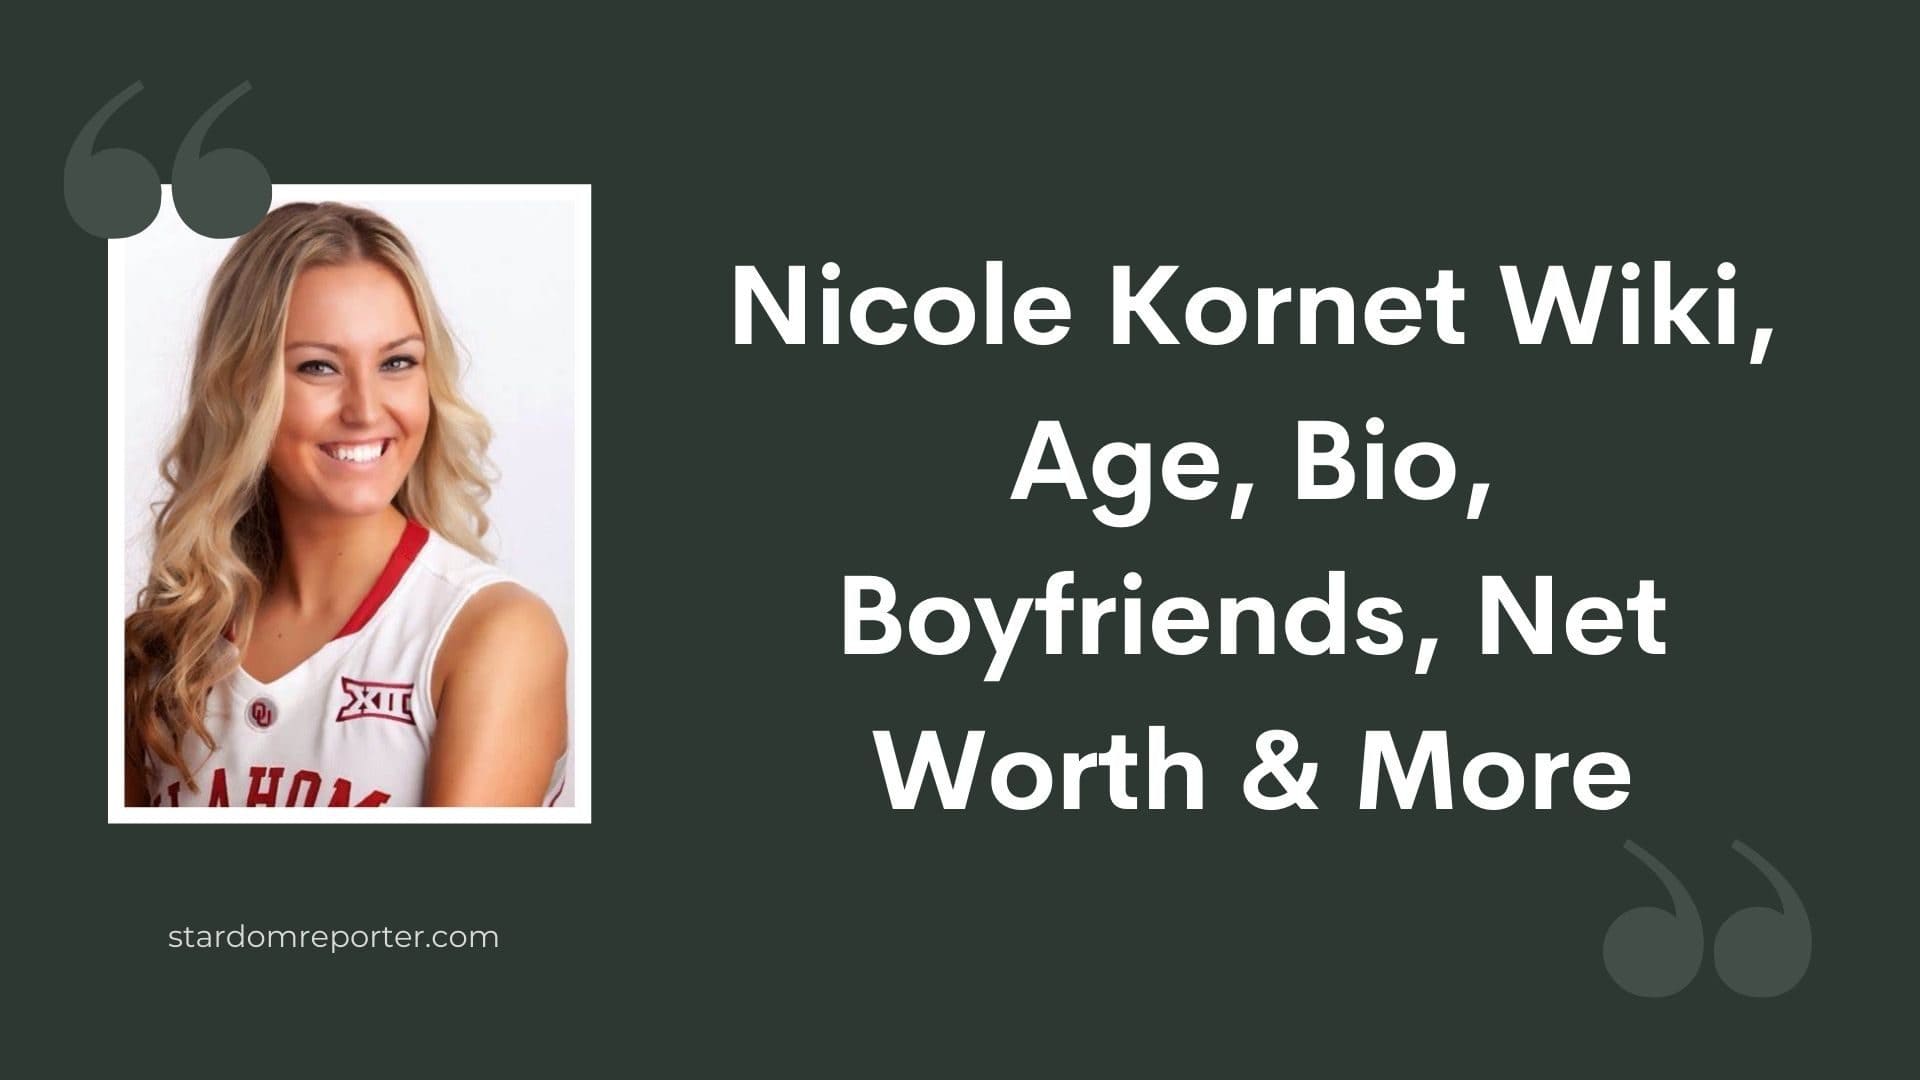 Nicole Kornet Wiki, Age, Bio, Boyfriends, Net Worth & More - 39